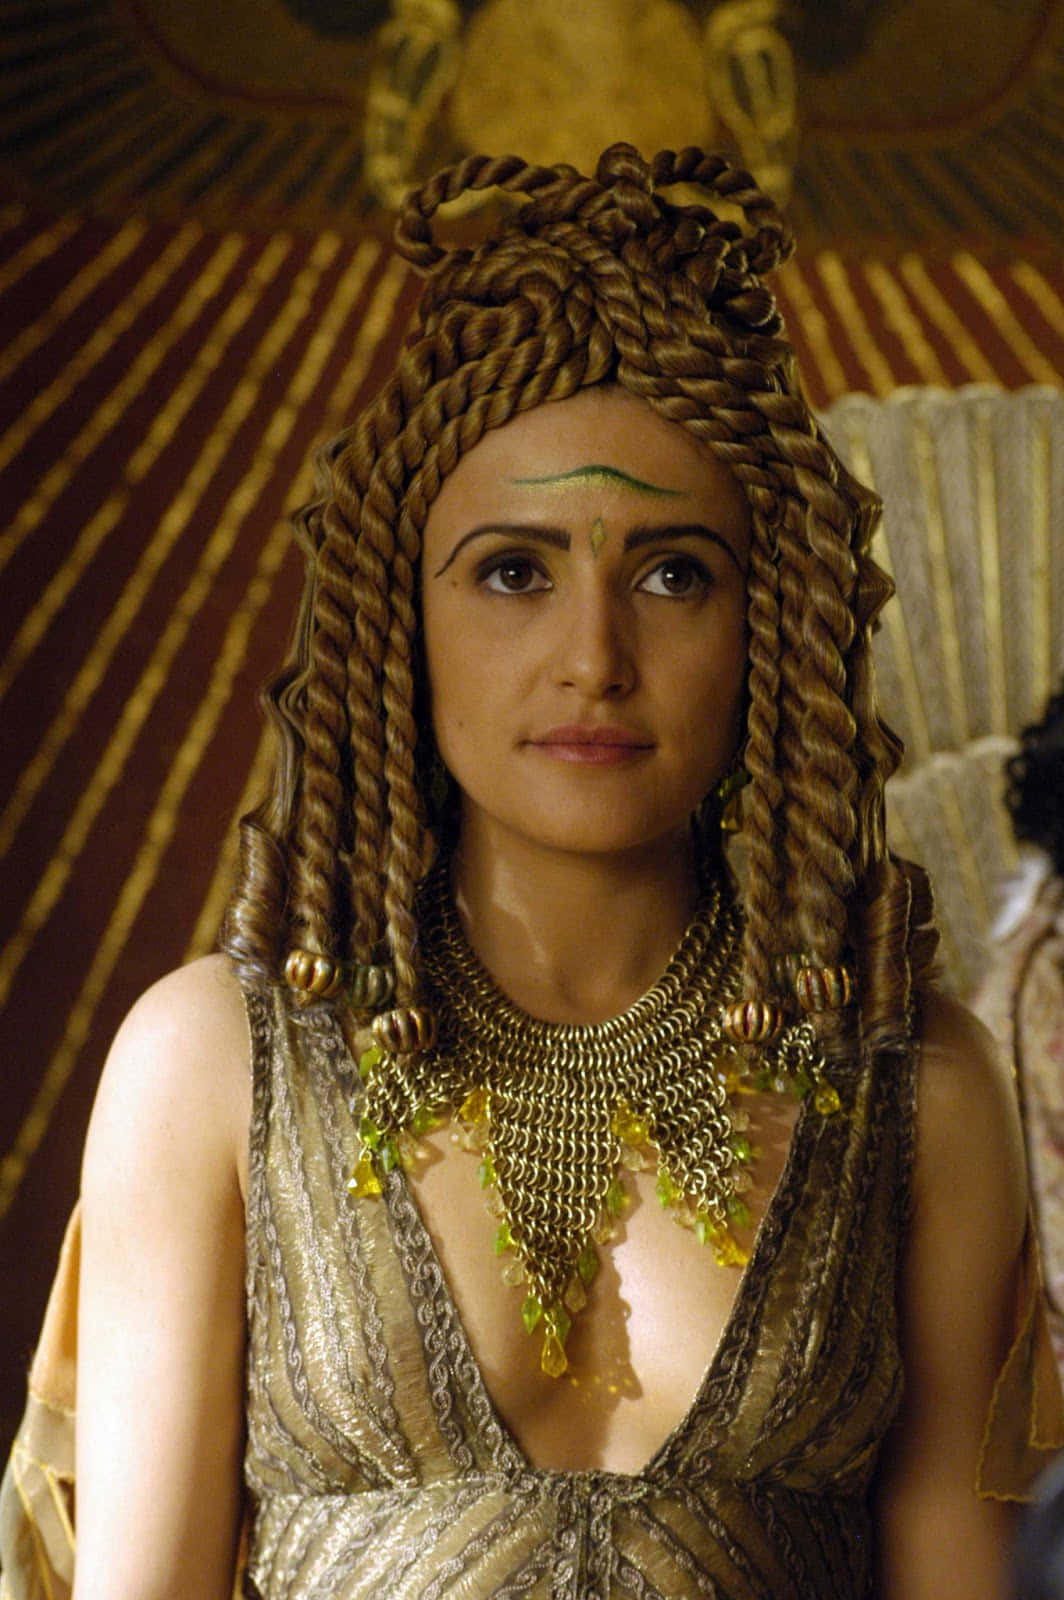 Portrait of the famed Egyptian ruler, Cleopatra